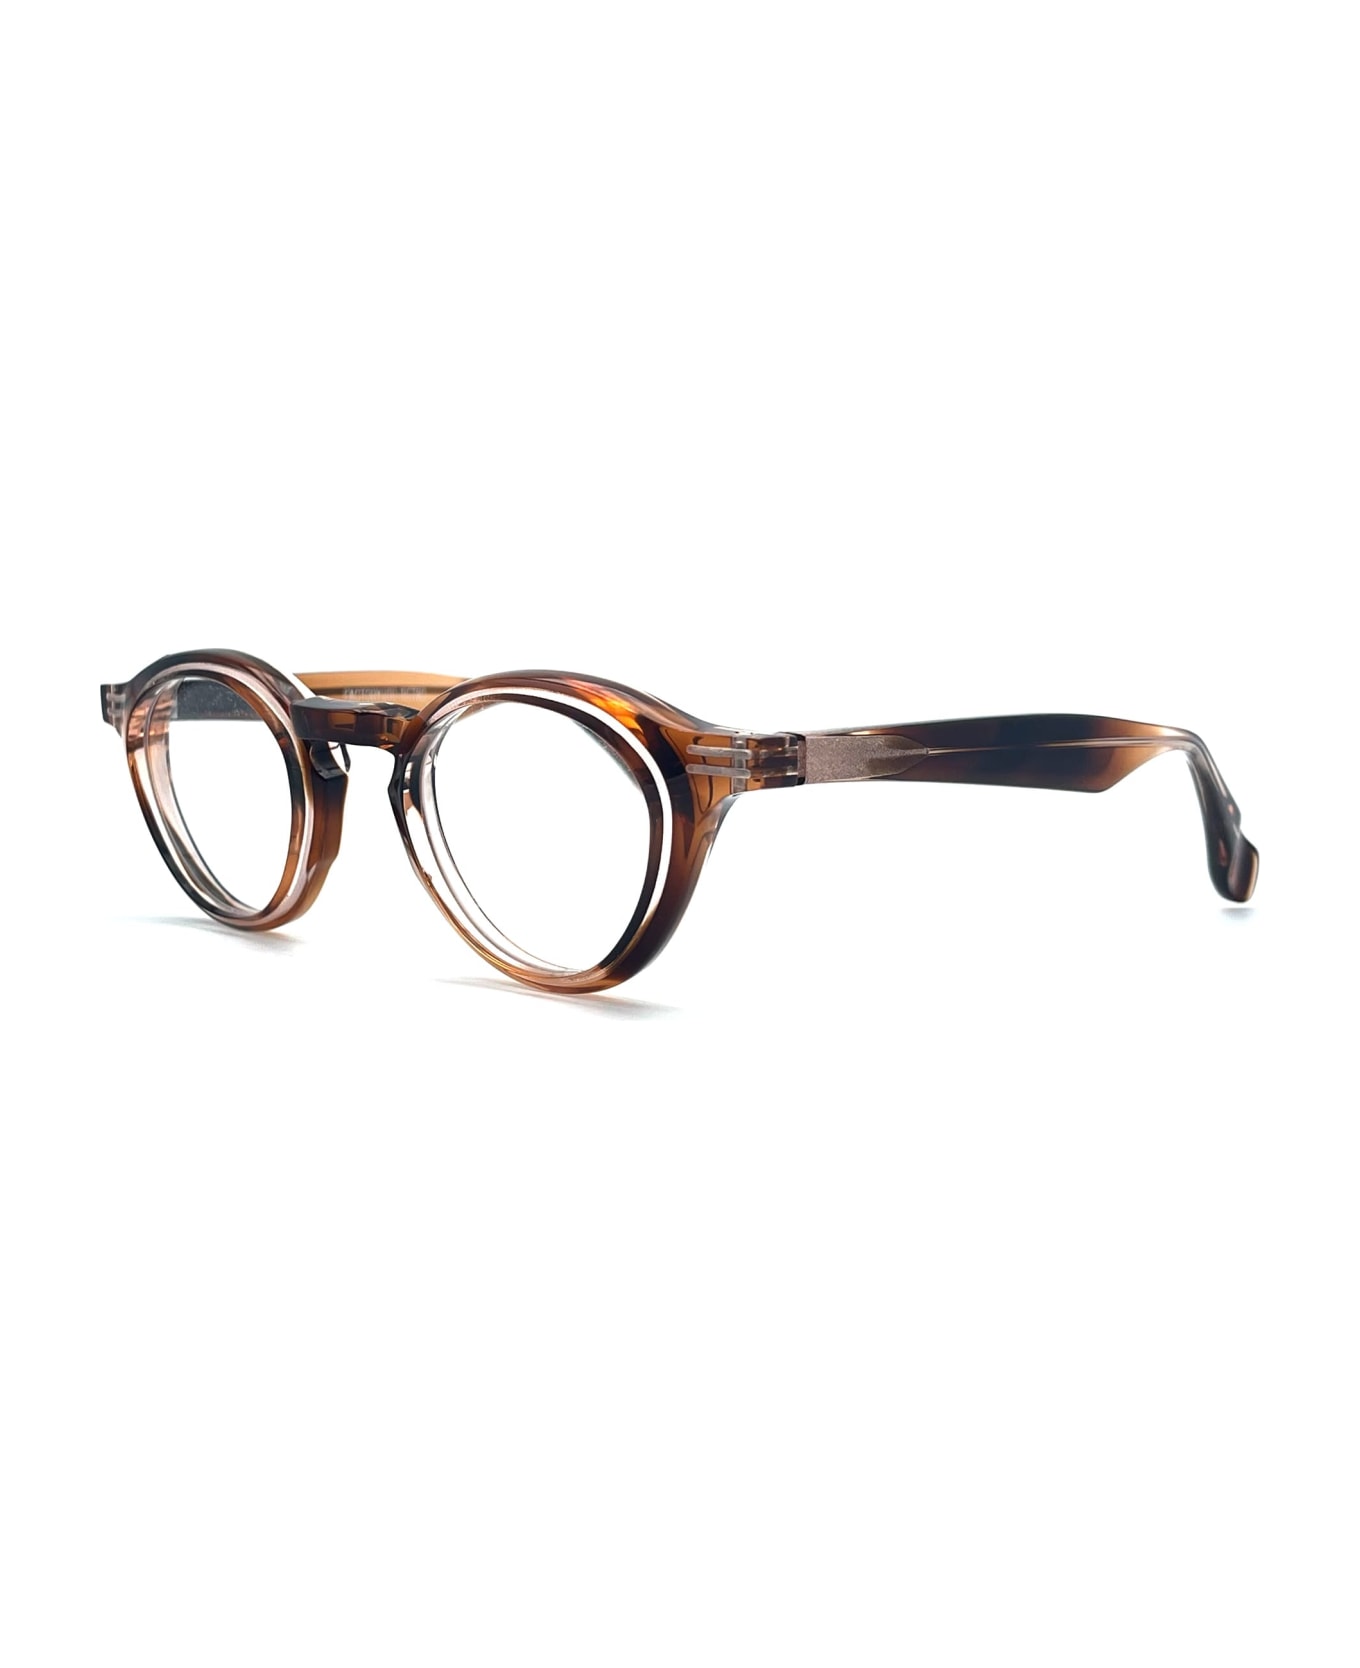 FACTORY900 Rf-019 - 319 Glasses - brown